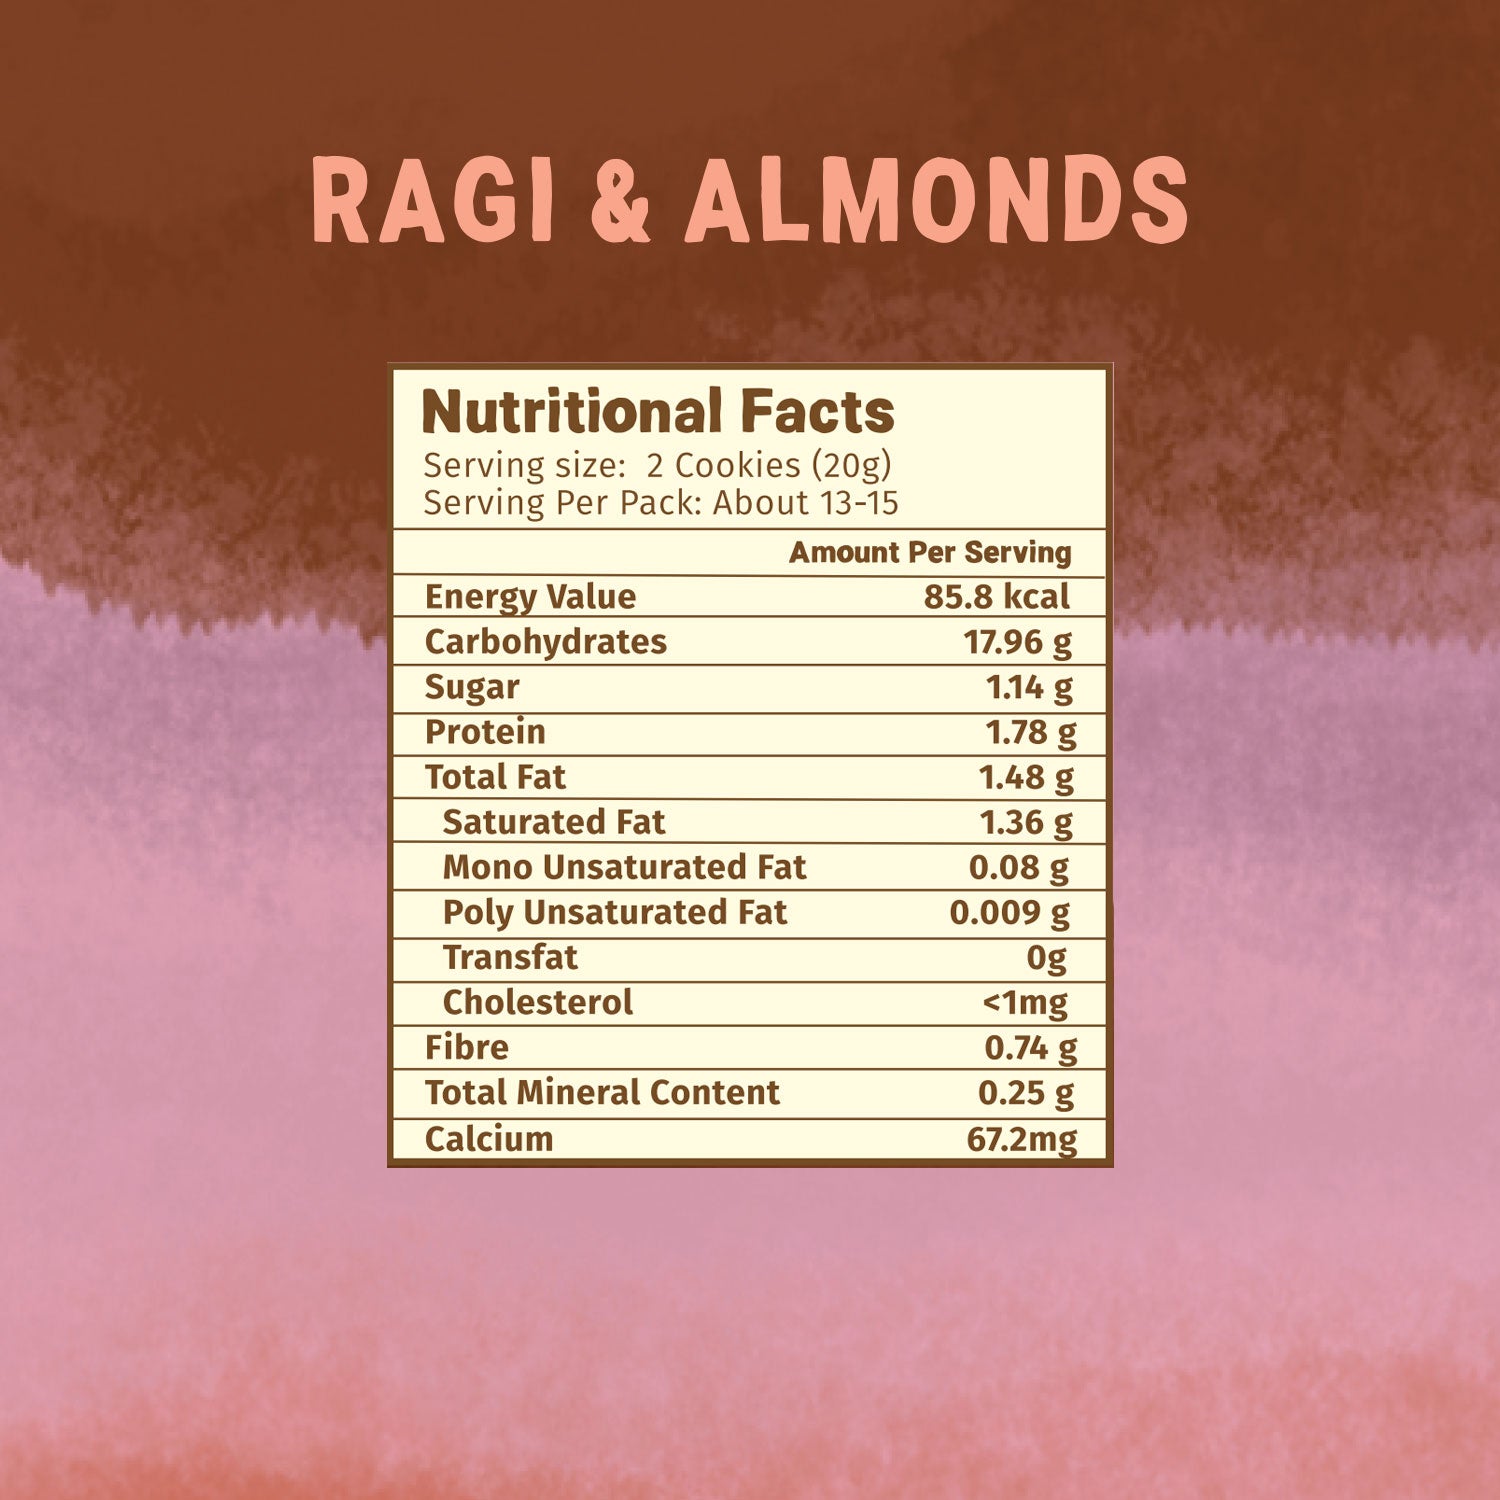 Healthy & Nutritional Cookies for Kids - Pack of 3| |Choco Bajra | Ragi & Almonds | Sweet & Savory | 150g each